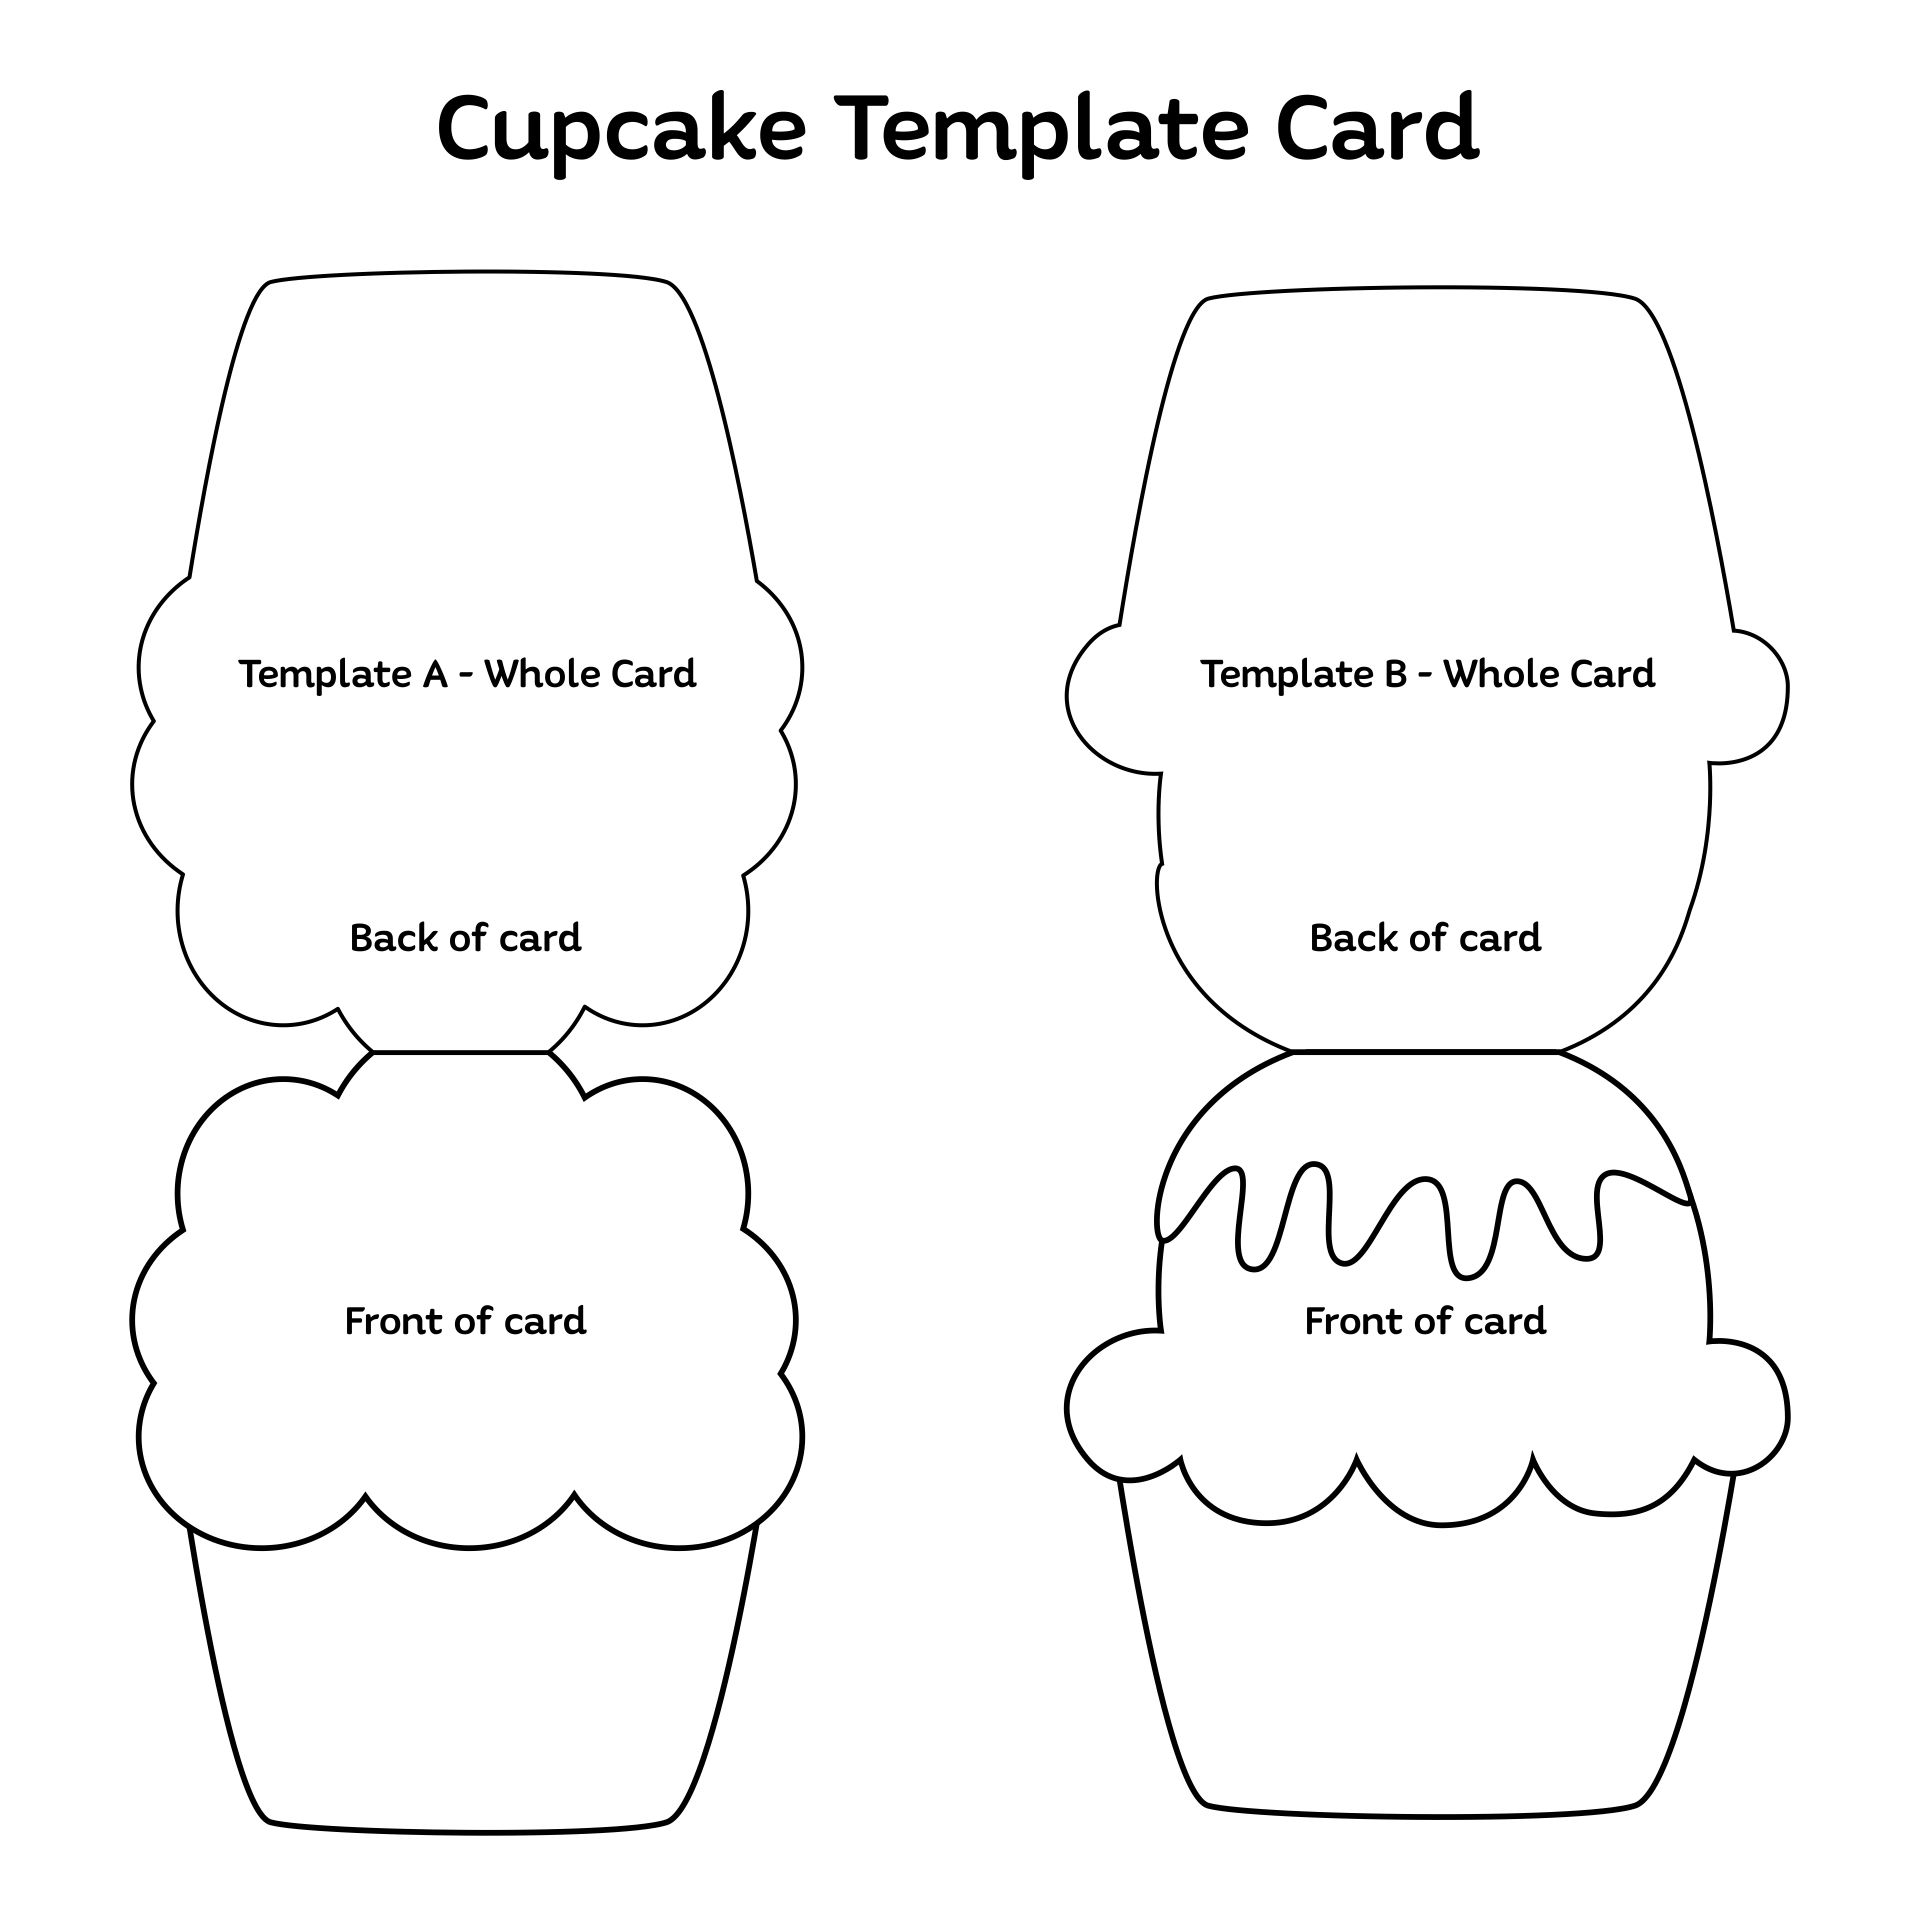 Printable Cupcake Template Card